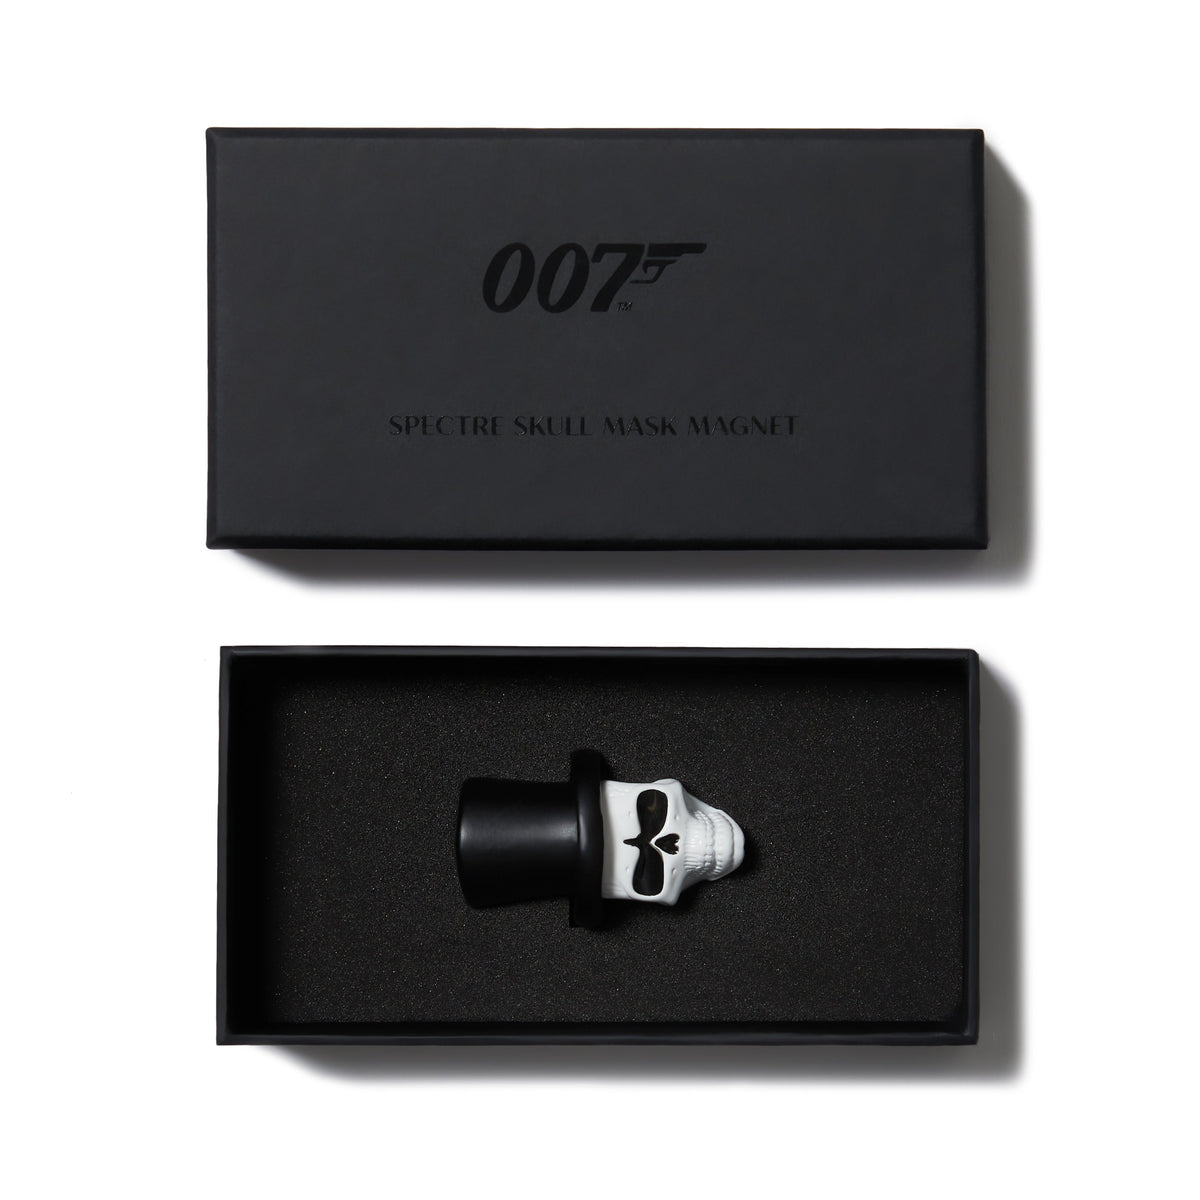 James Bond Spectre Skull Mask Metal &amp; Enamel Magnet MAGNET EML 